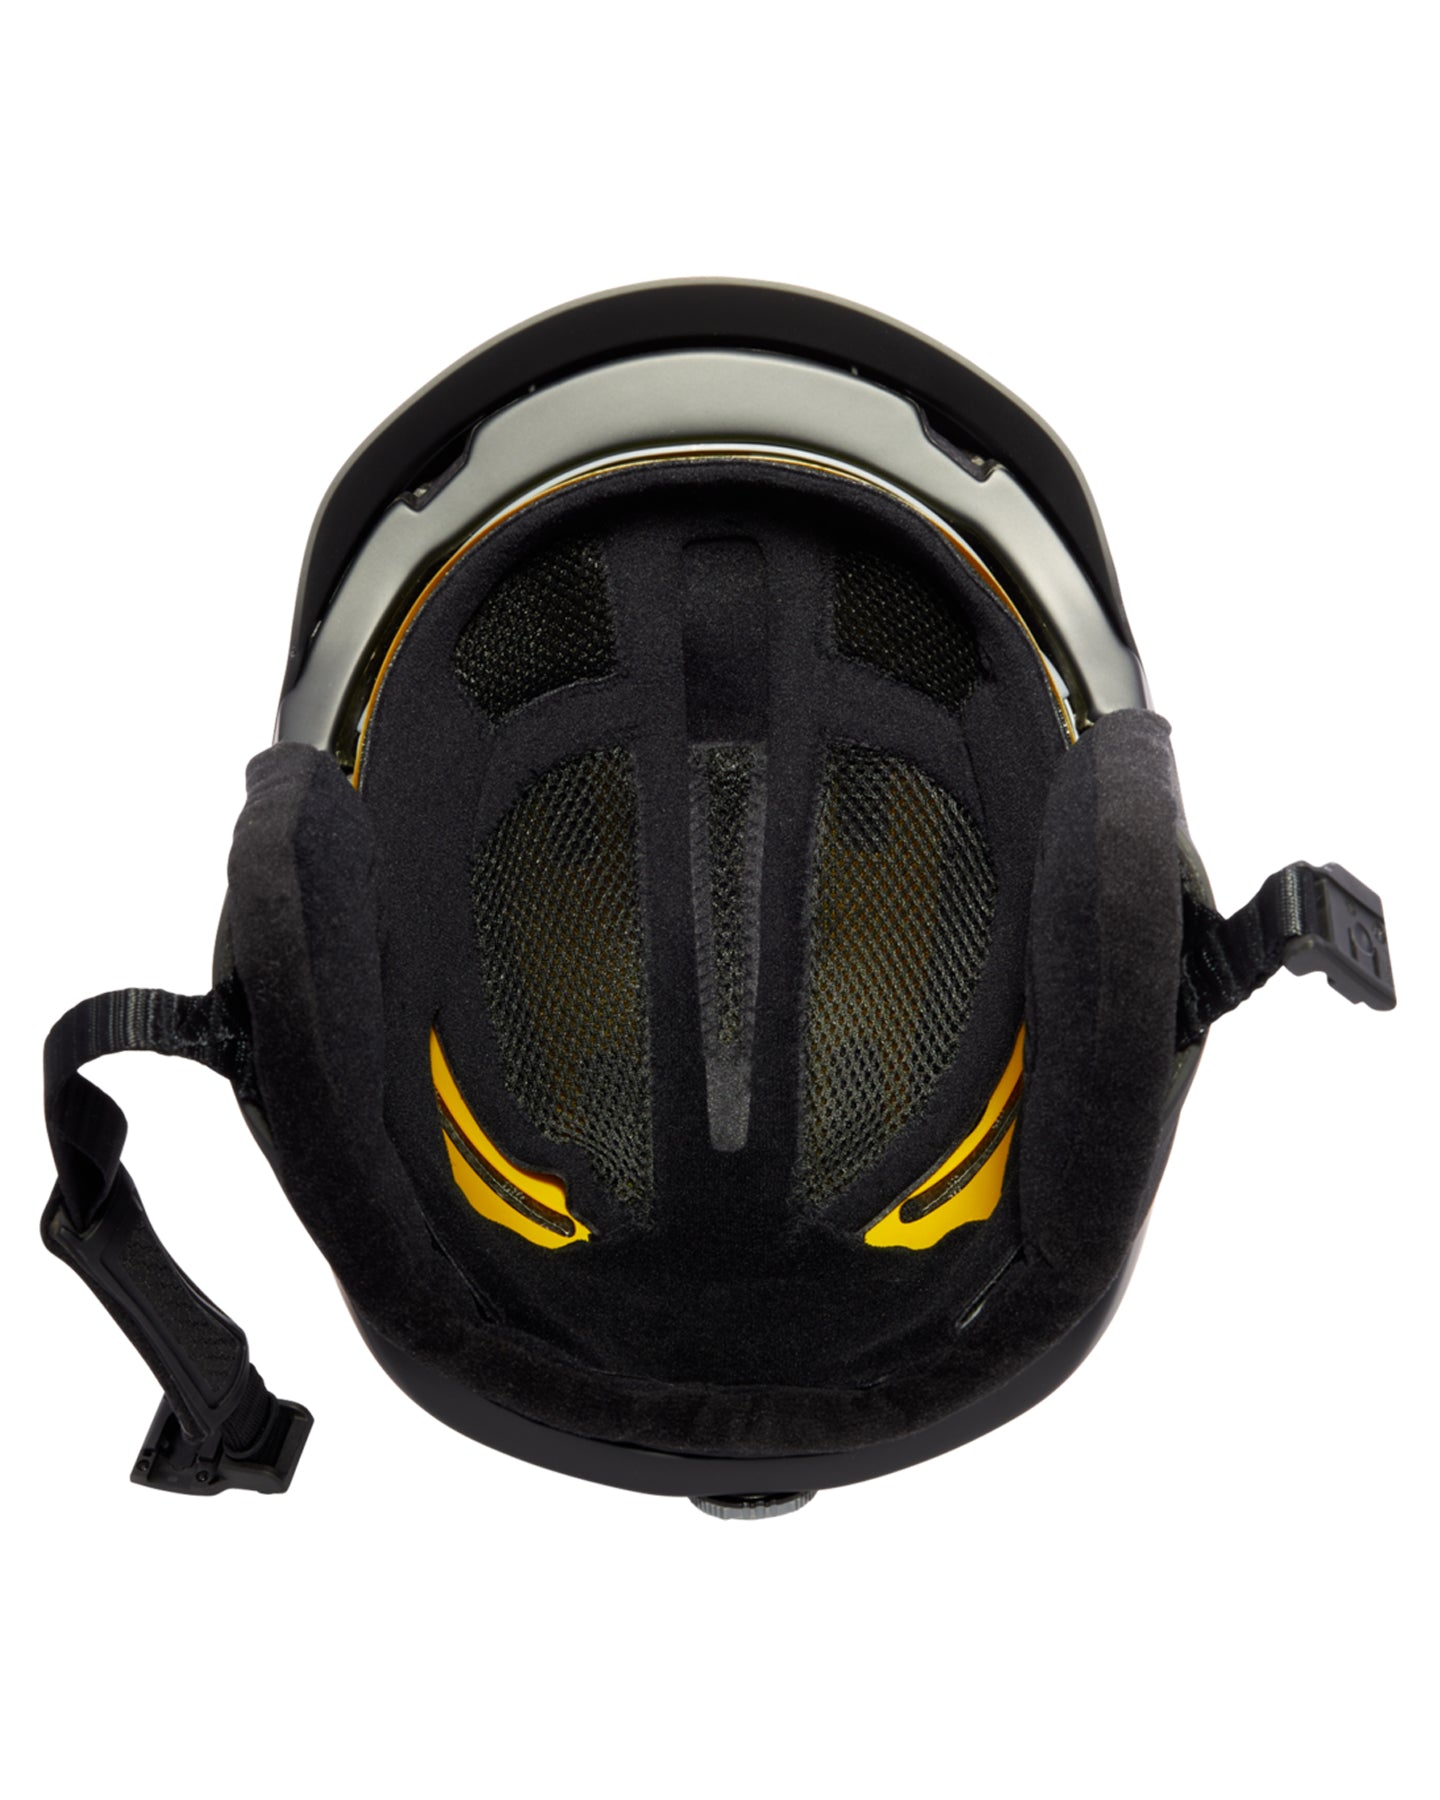 Anon Prime MIPS Snow Helmet - Blackout Men's Snow Helmets - SnowSkiersWarehouse